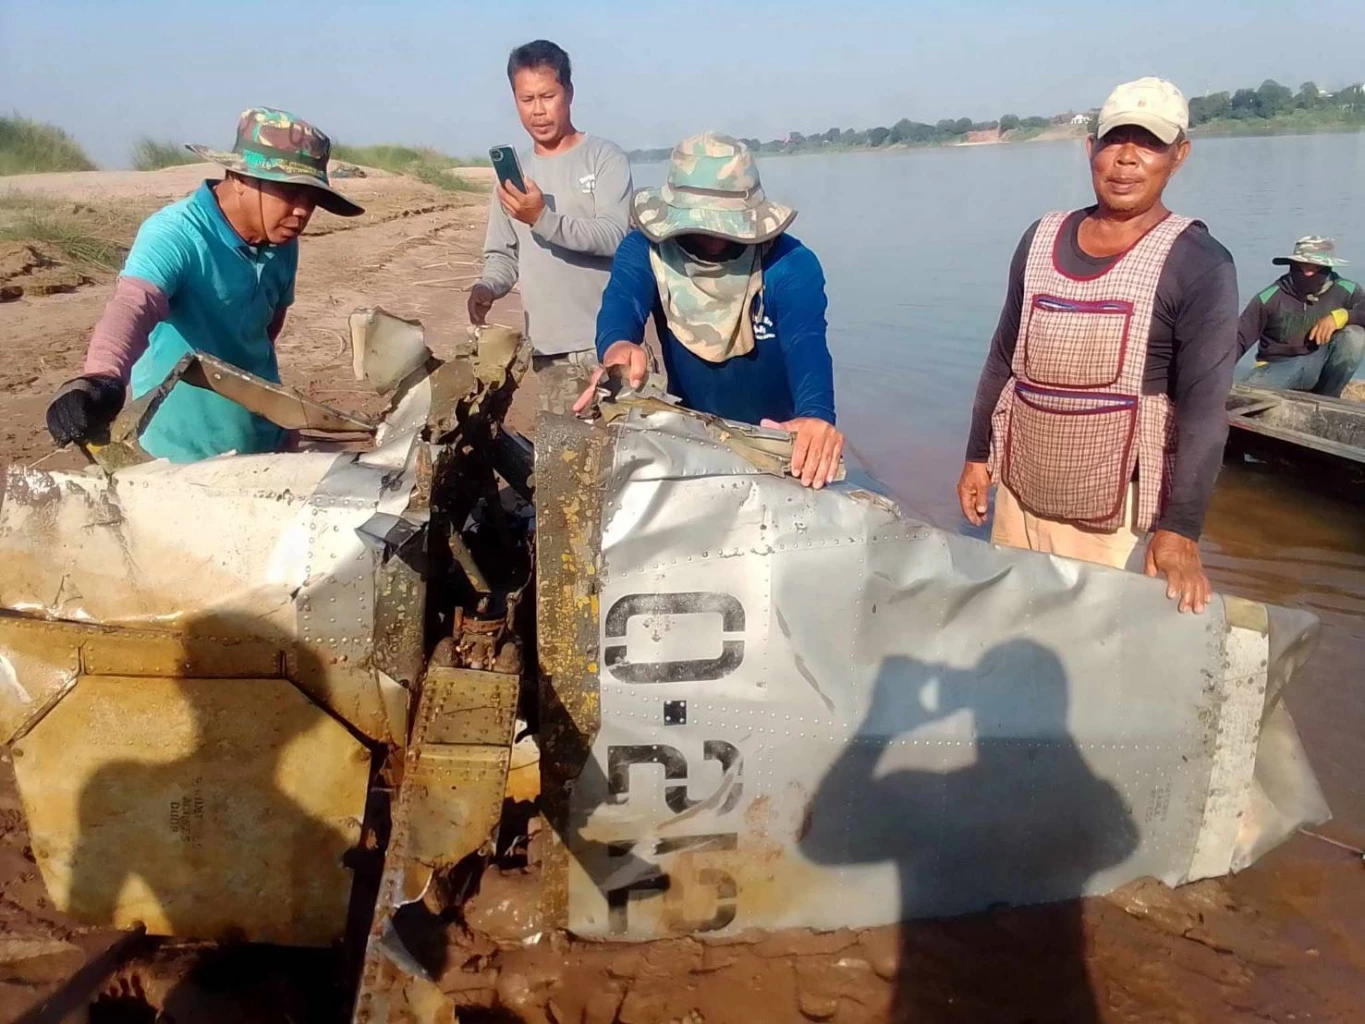 Local fishermen hooked over Vietnam warplane wreckage found in Mekong